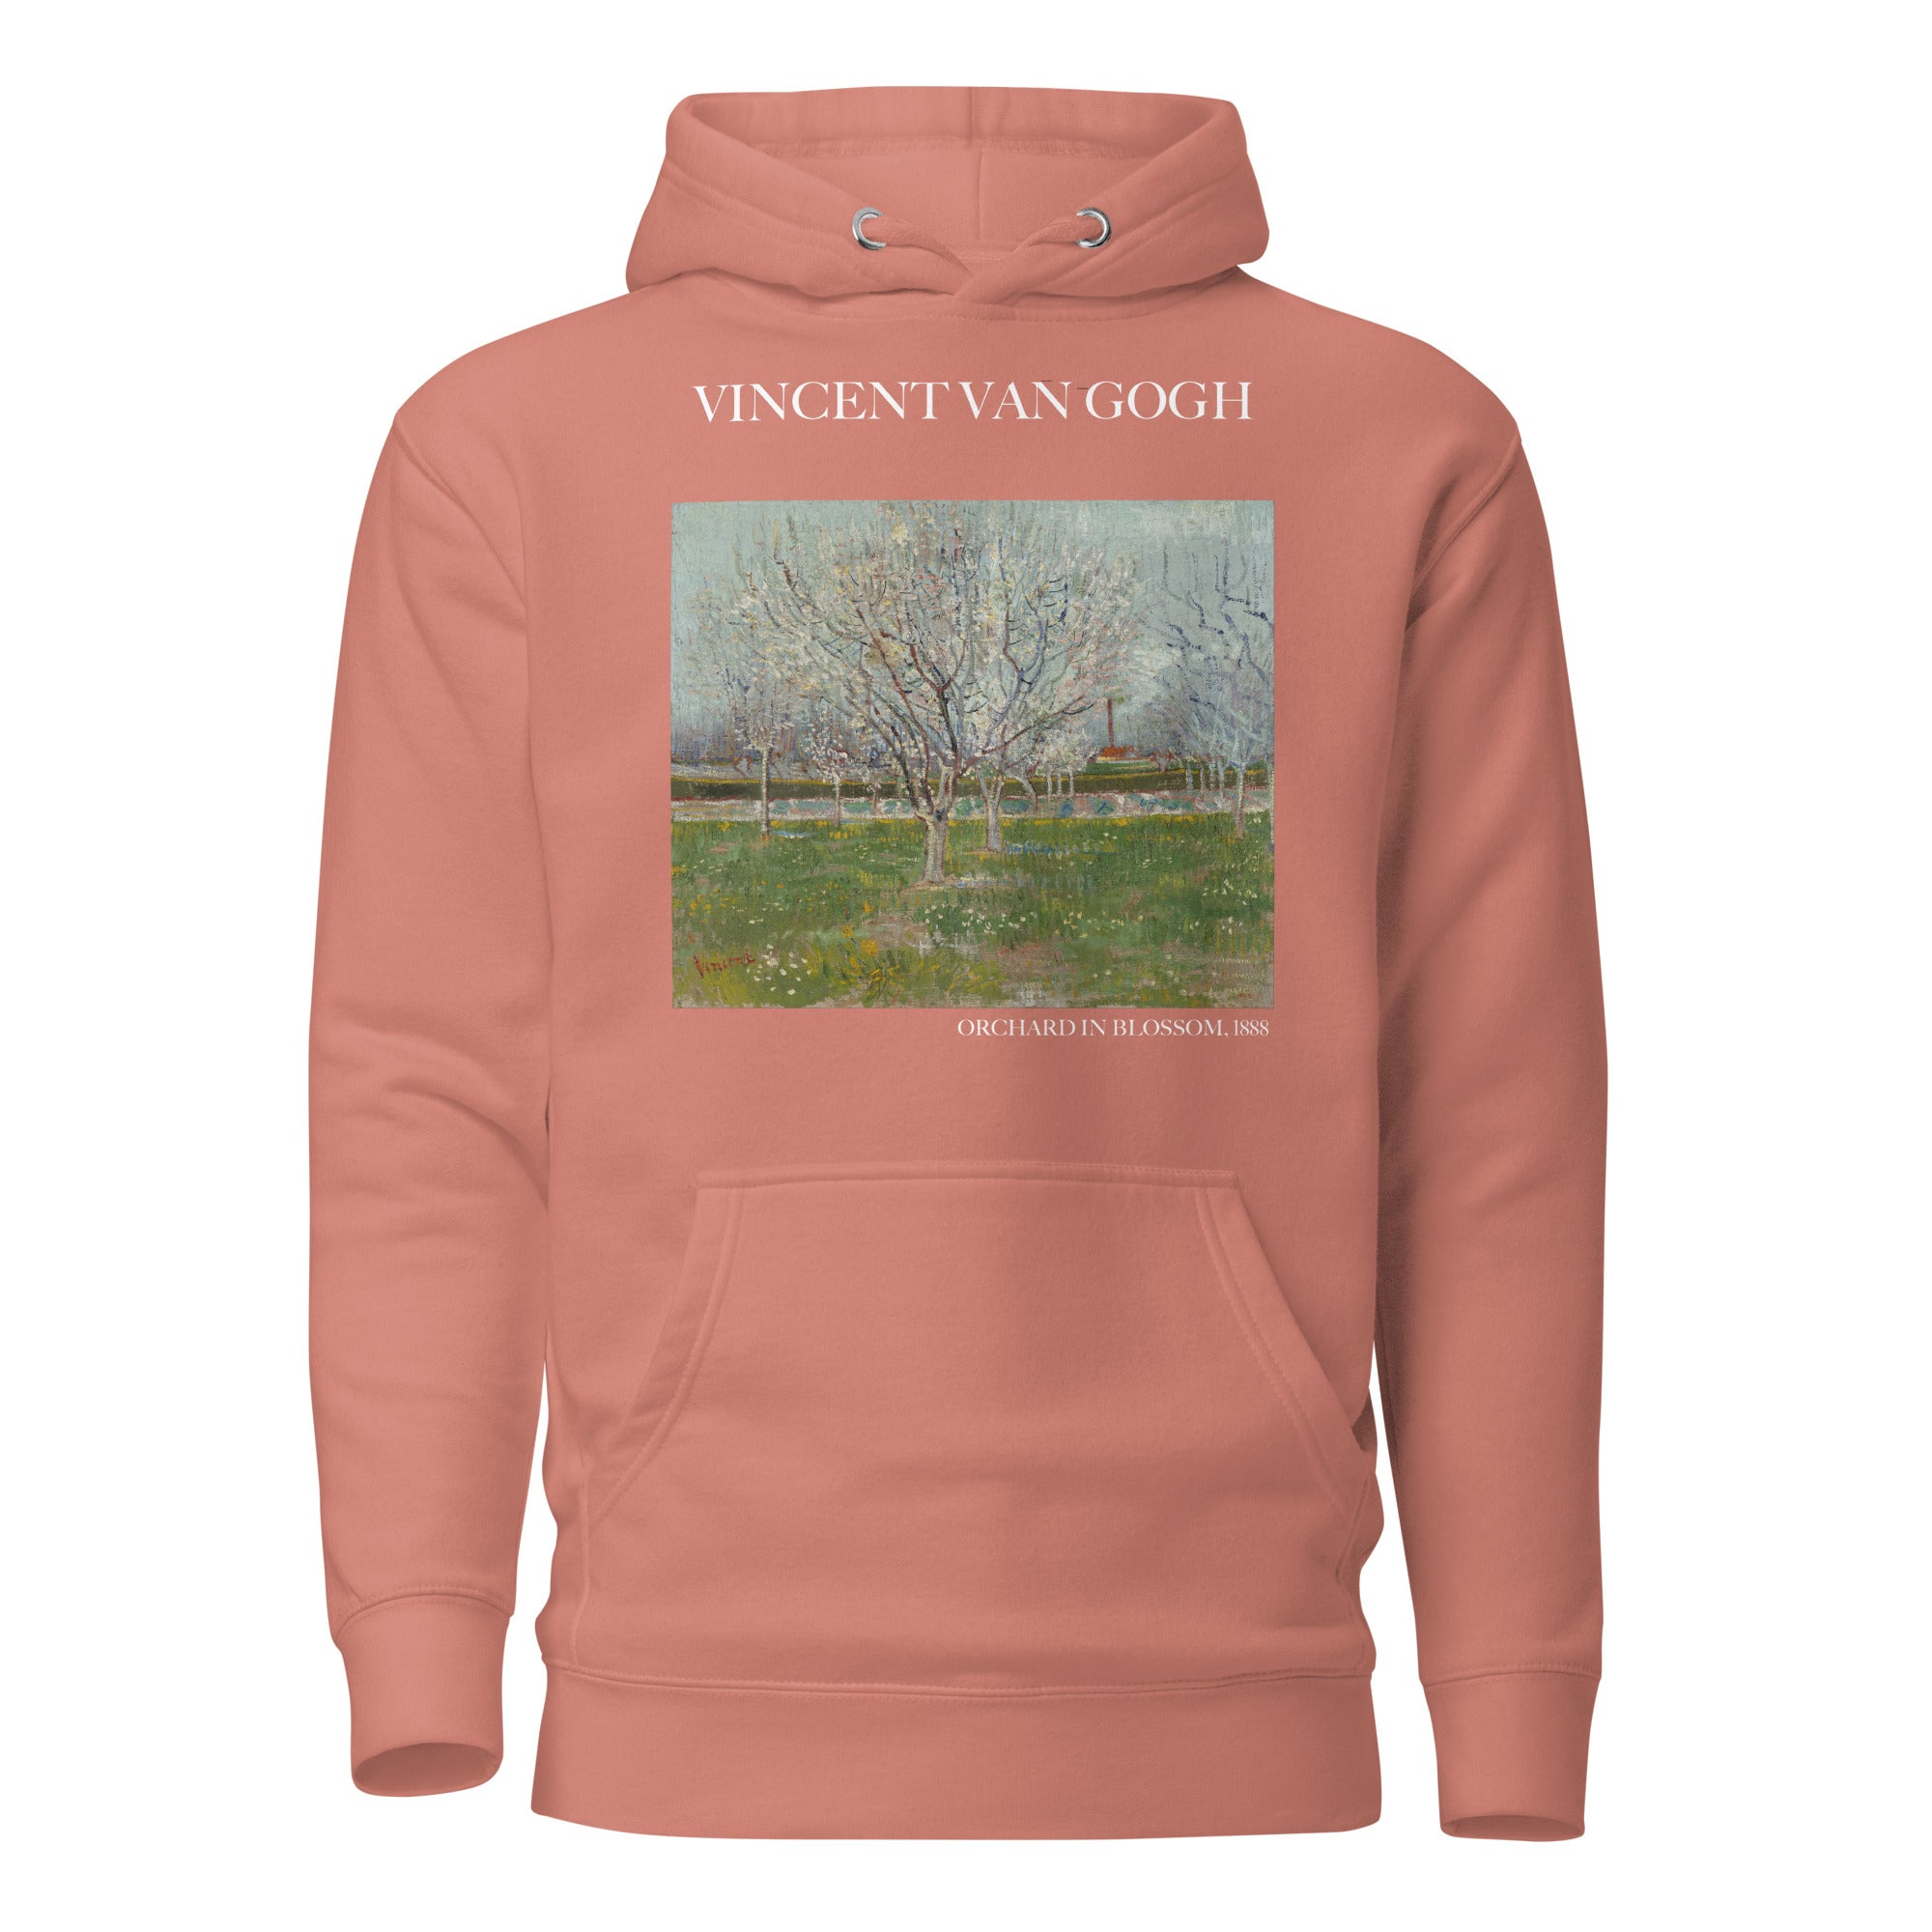 Vincent van Gogh 'Orchard in Blossom' Famous Painting Hoodie | Unisex Premium Art Hoodie